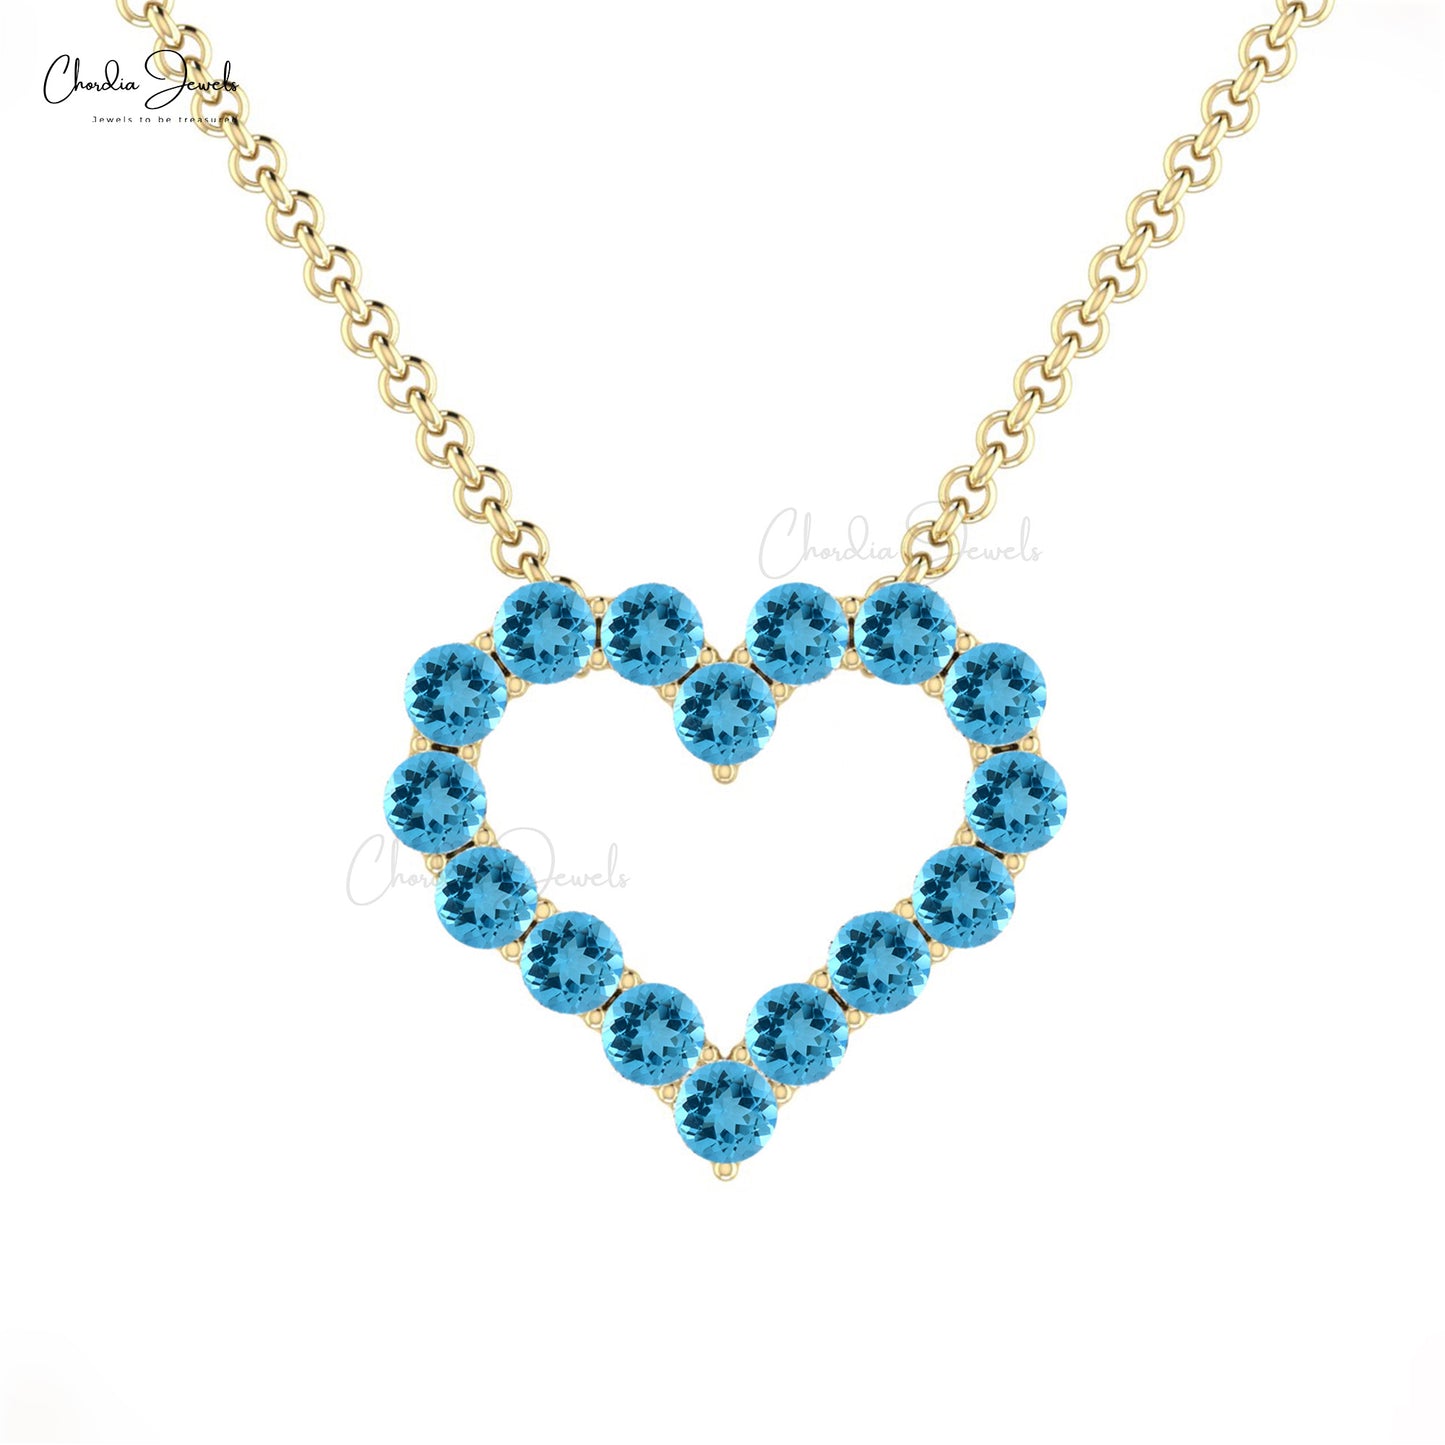 Swiss Blue Topaz Necklaces